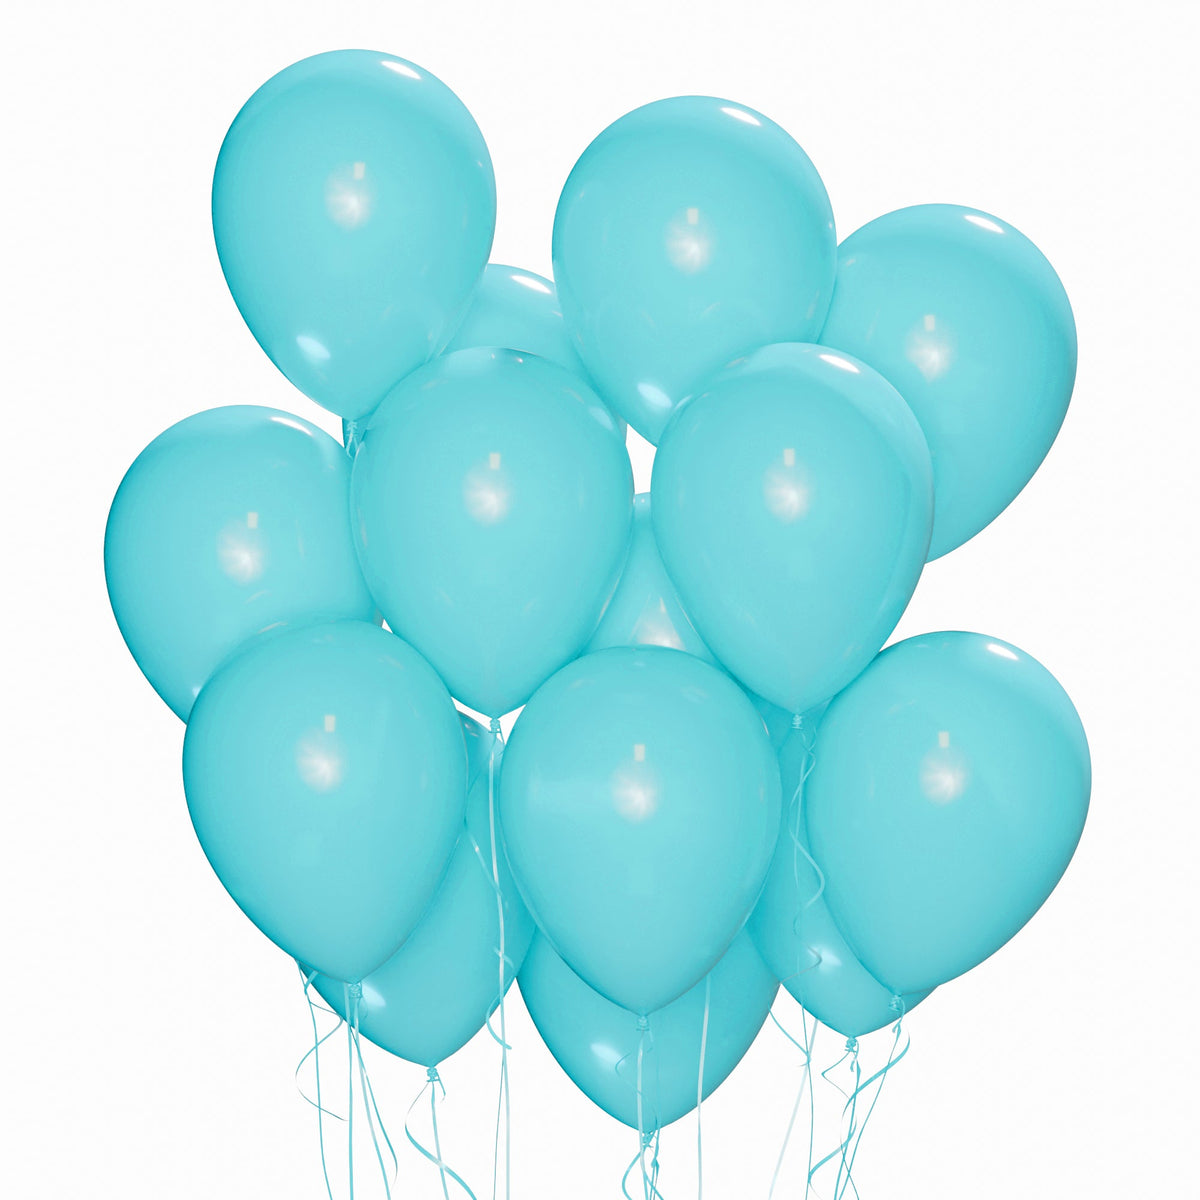 WIDE OCEAN INTERNATIONAL TRADE BEIJING CO., LTD Balloons Caribbeau Blue Latex Balloon 12 Inches, 15 Count 810064197864